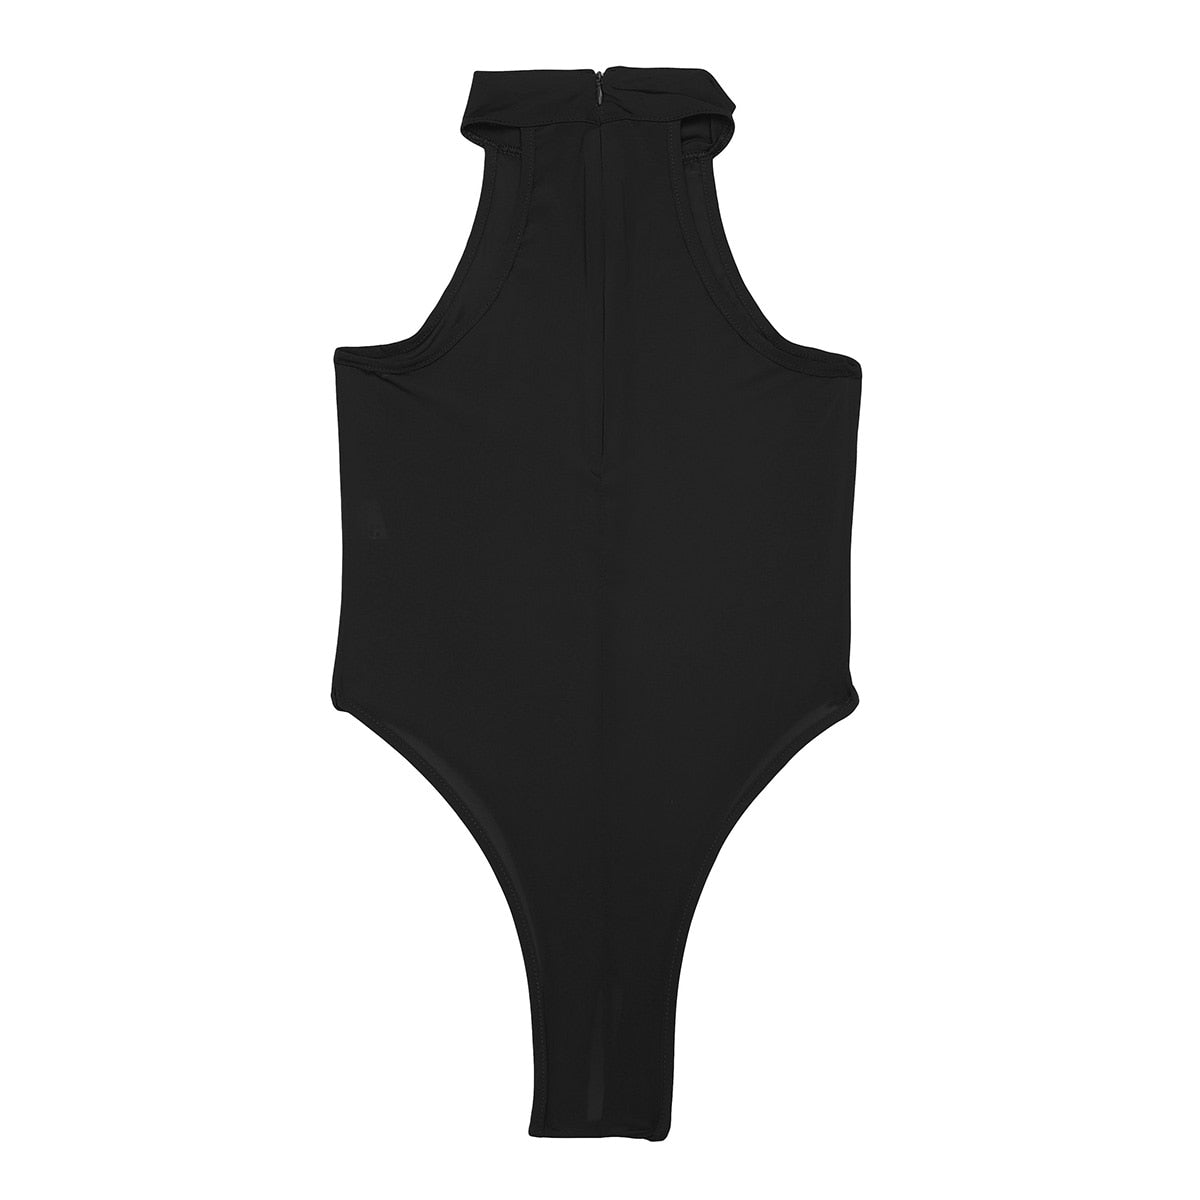 Mock Neck Zipper Swimwear One Piece Swimsuit Sexy Bathing Suits Lingerie High Cut Sleeveless Leotard Bodysuit Jumpsuit The Clothing Company Sydney